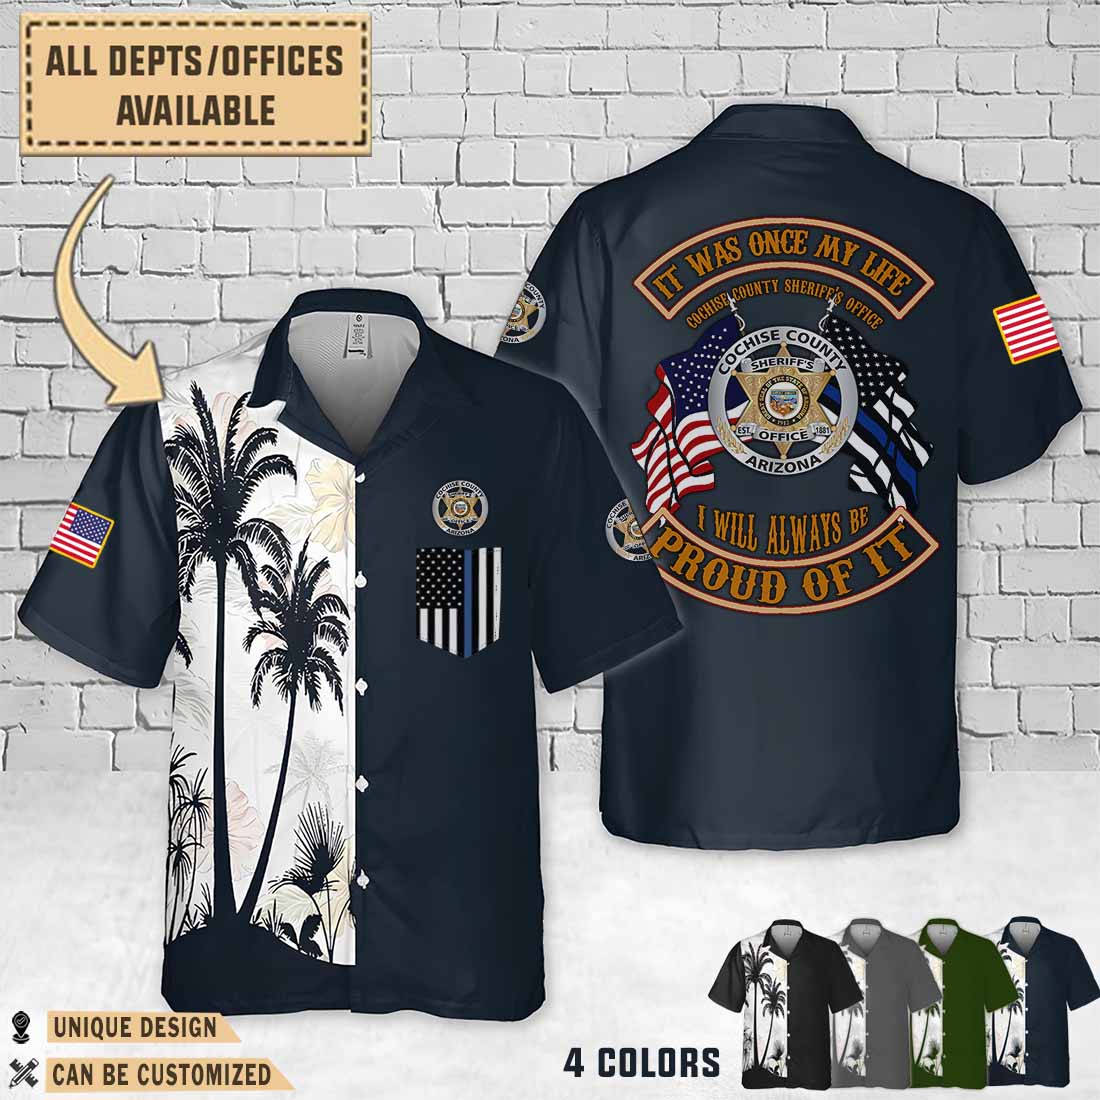 cochise county sheriffs office azdual flag hawaiian shirt j9174